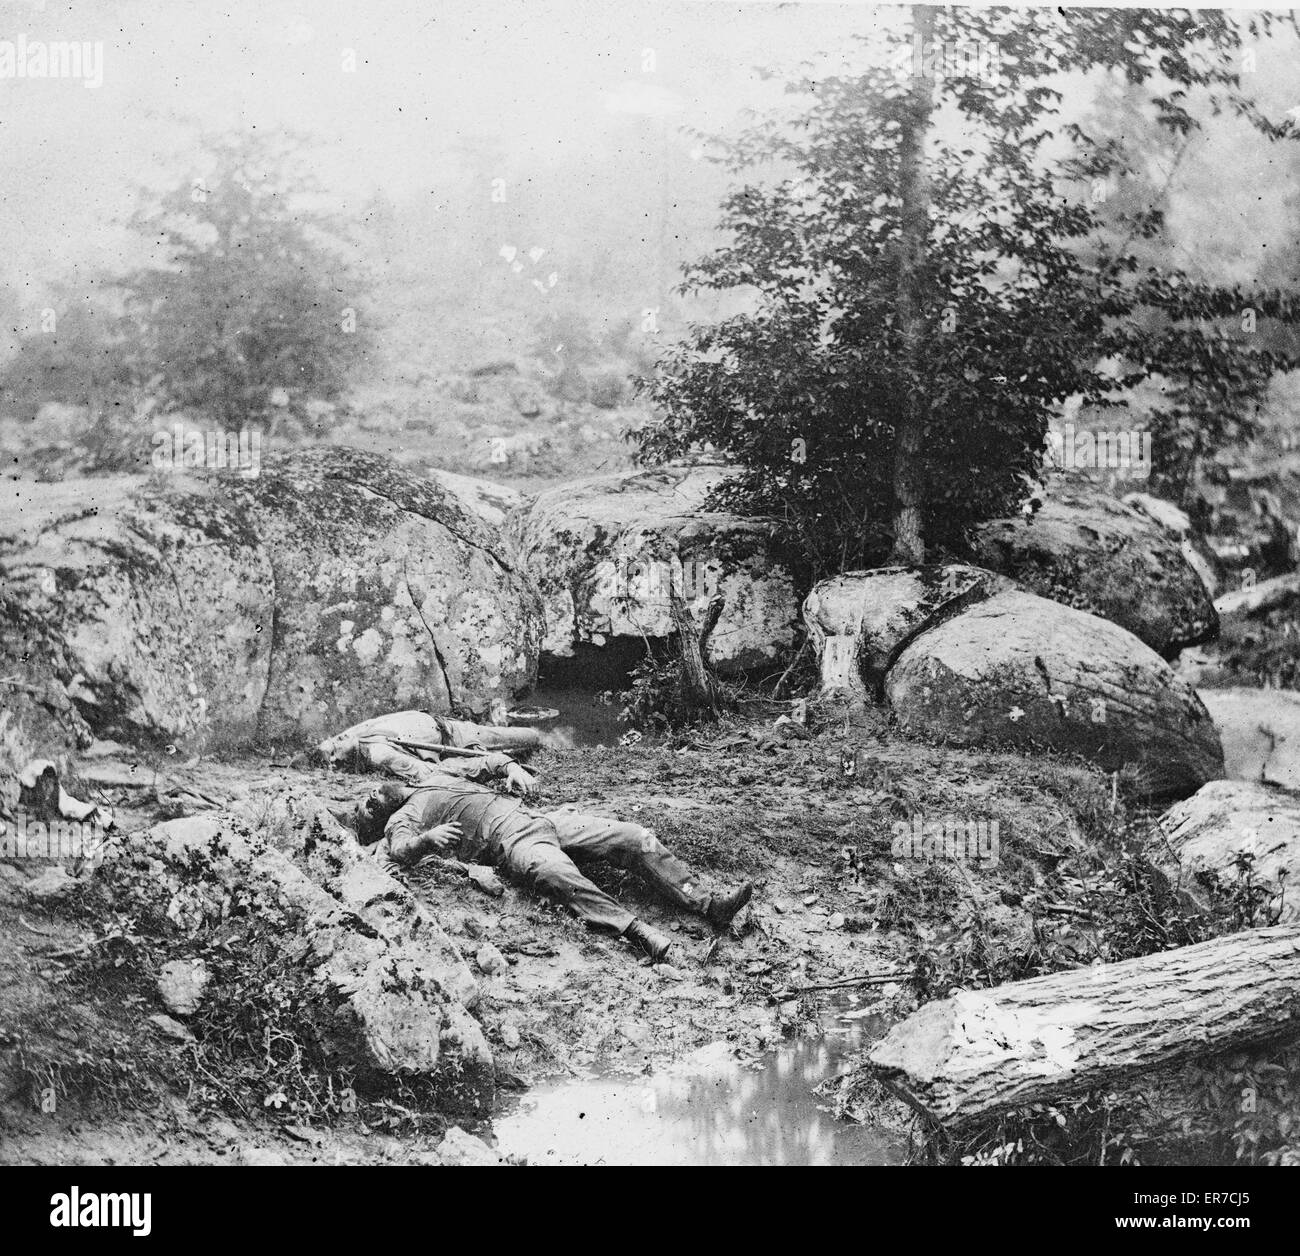 Gettysburg, Civil War Art/ Battle of The Devil's Den, Slaughter Pen,  and Little Round Top - Gettysburg, 5PM, July 2nd, 1863